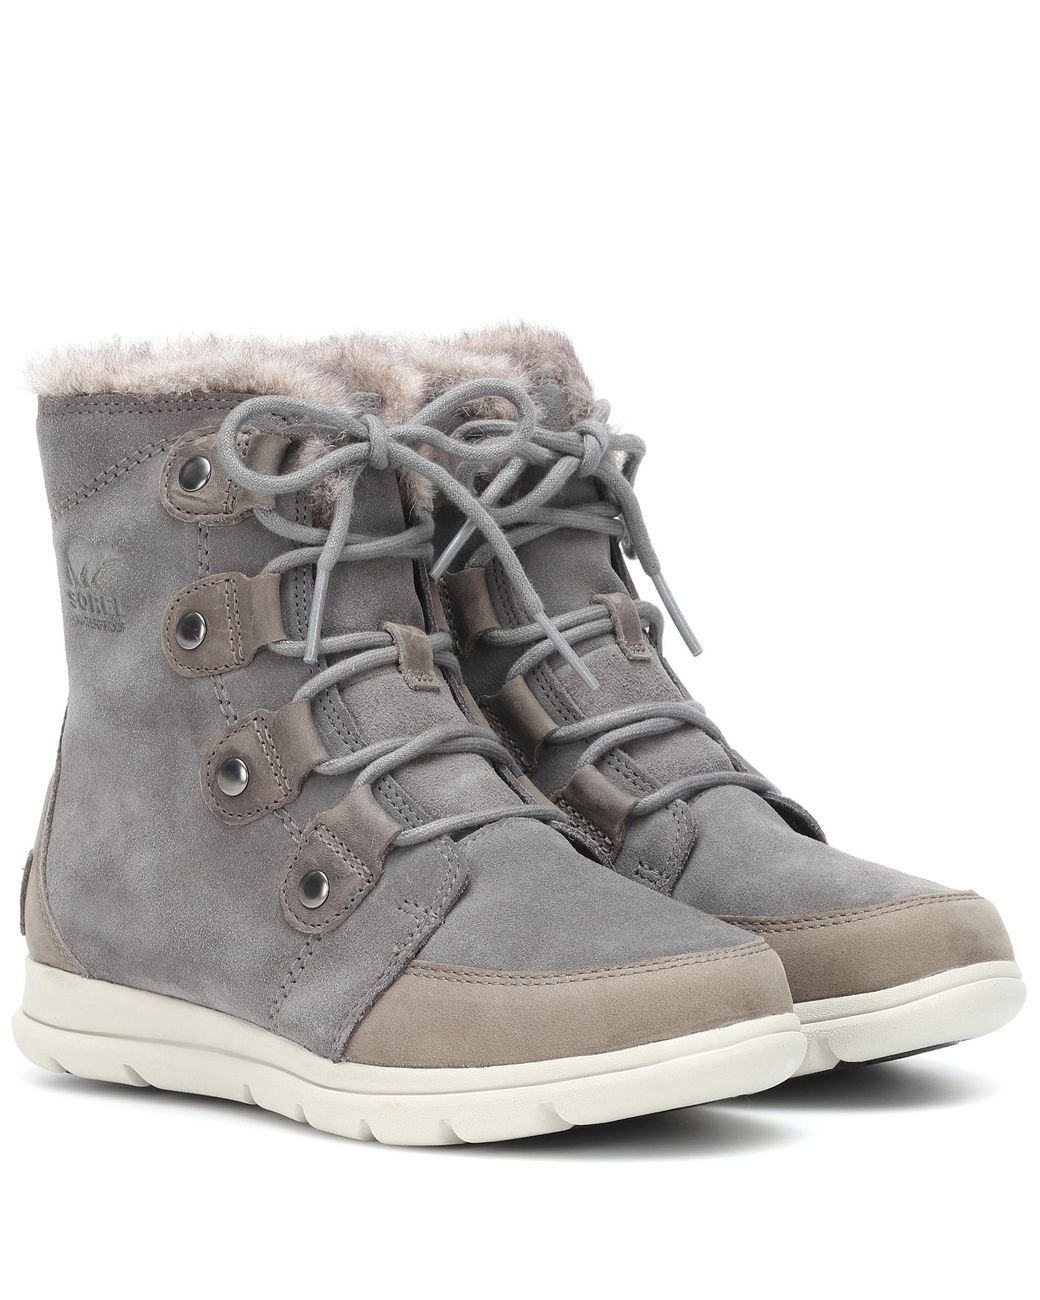 Sorel Explorer Joan Suede Boots in Grey (Gray) - Lyst